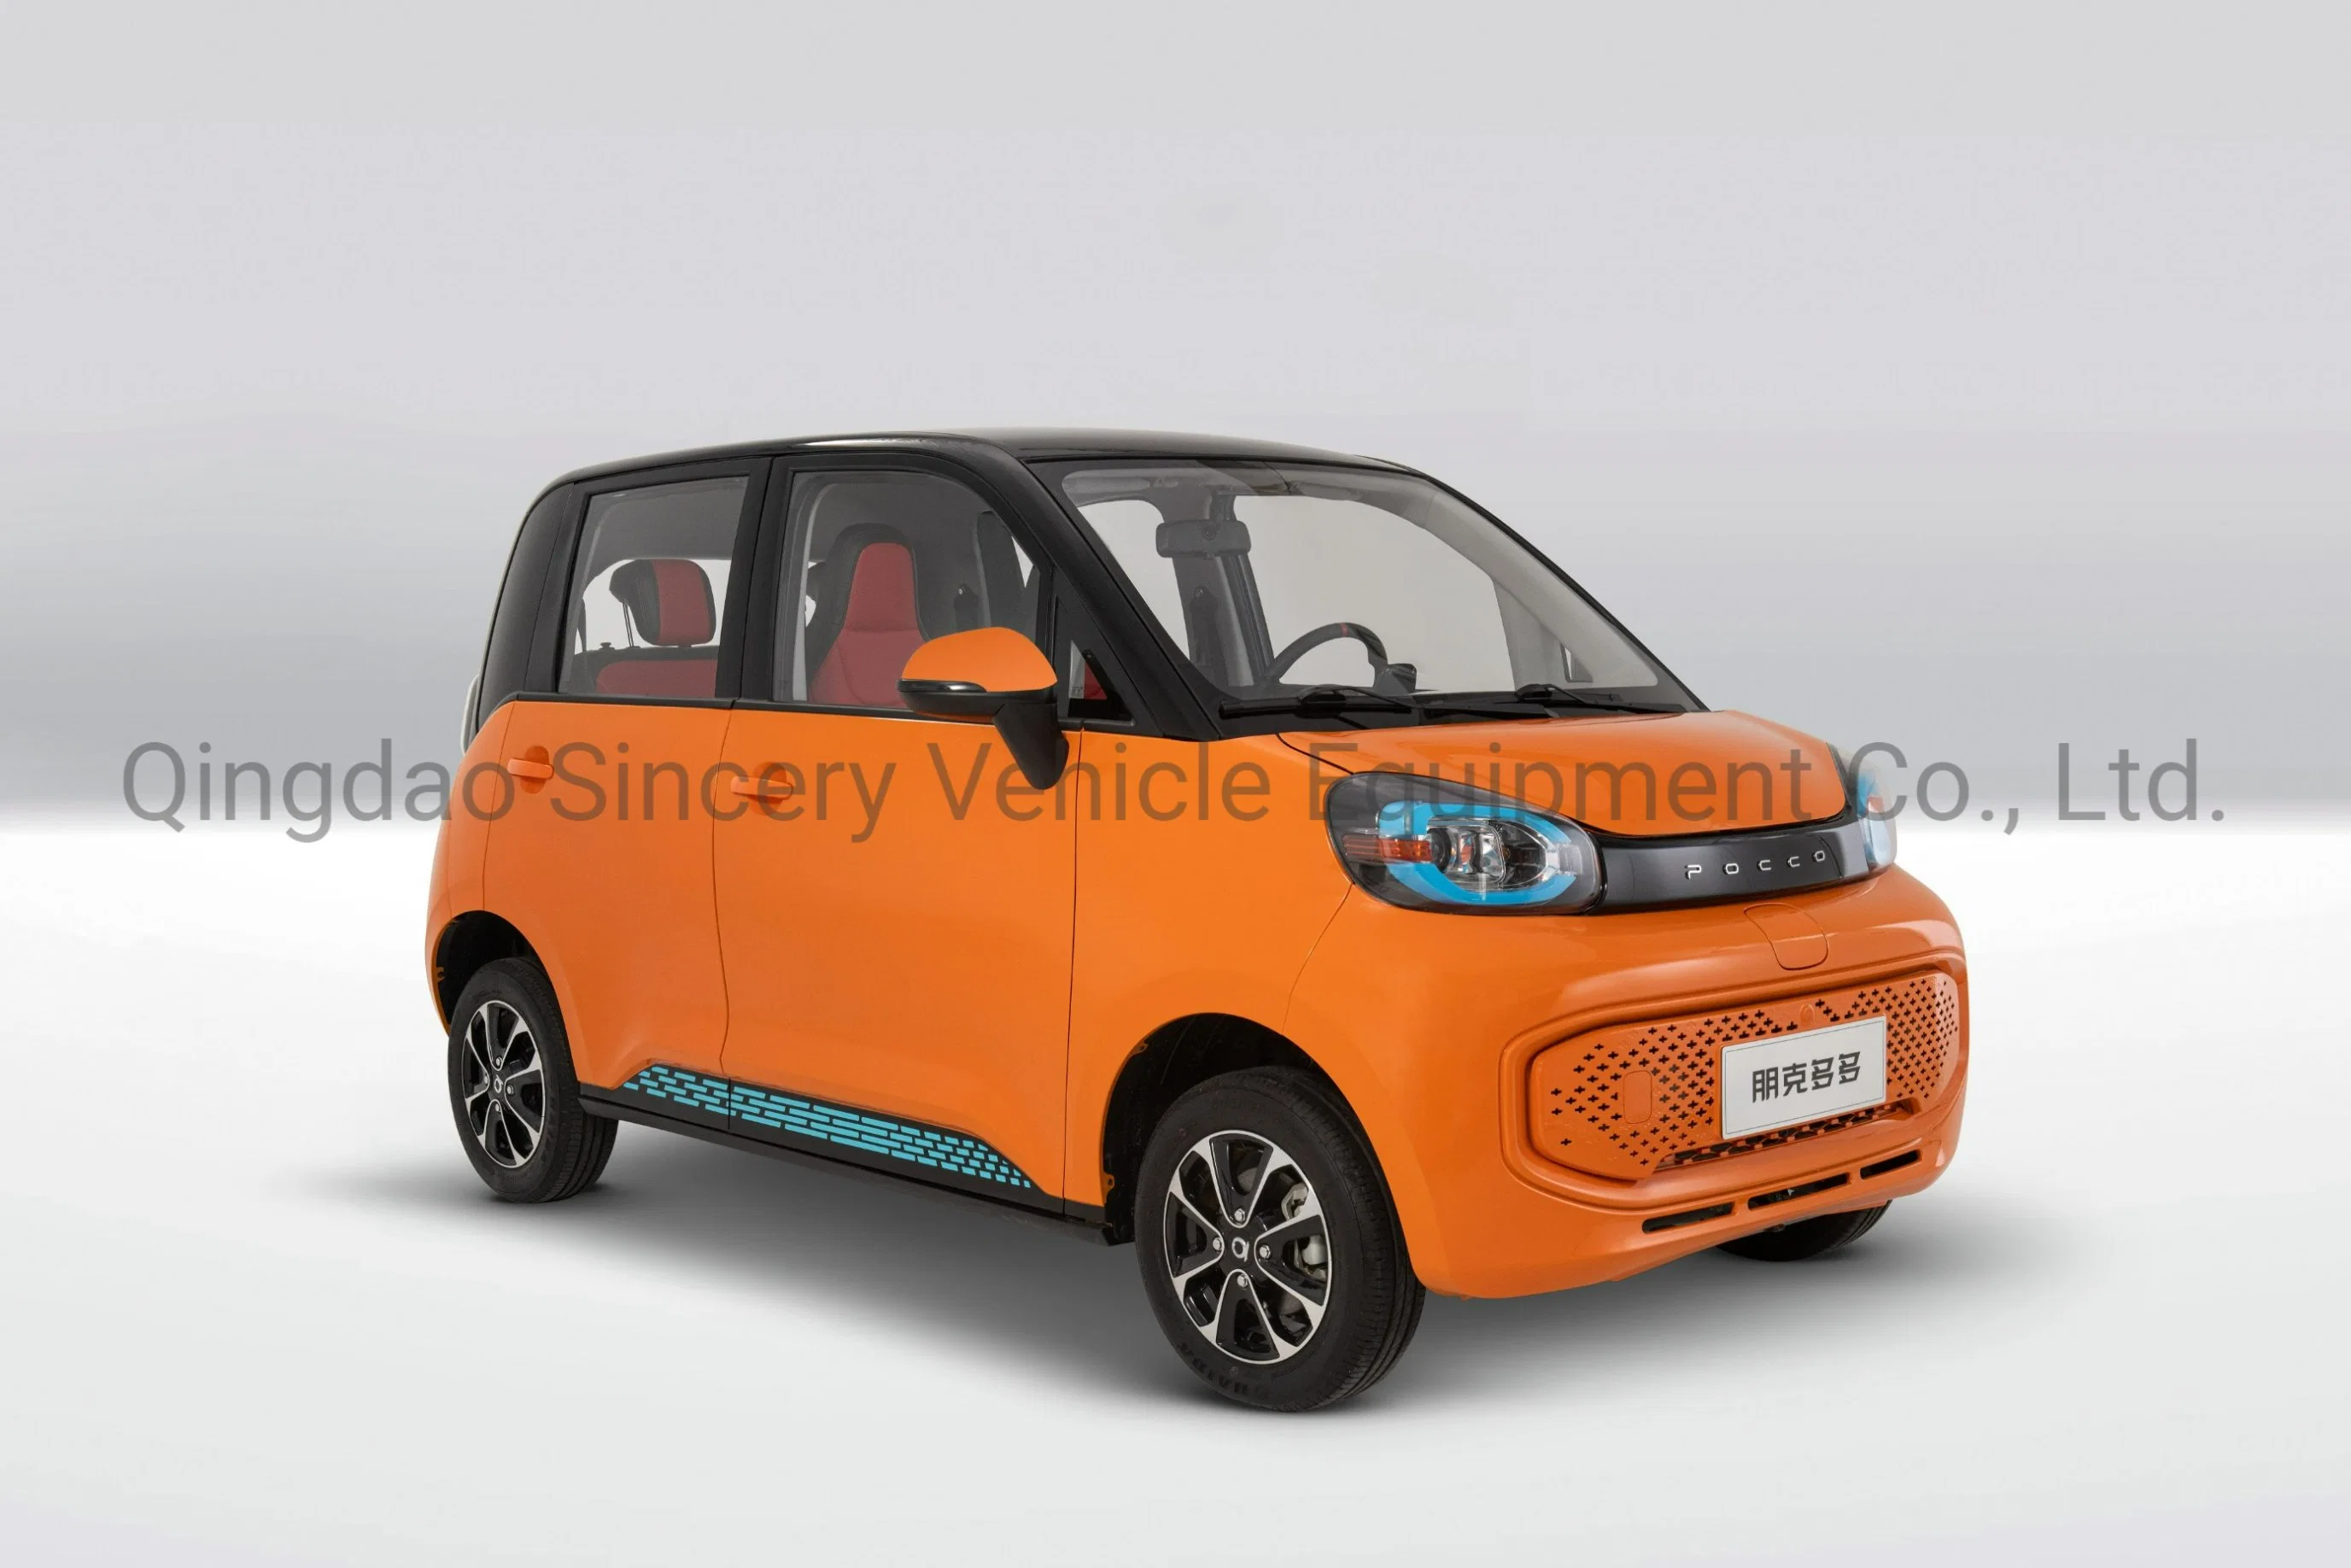 China fabricante de automóviles solares de alta velocidad Minicar EV Mini Coche eléctrico vehículo eléctrico de automóviles eléctricos Bev batería de coche de alquiler de coches solares vehículo batería